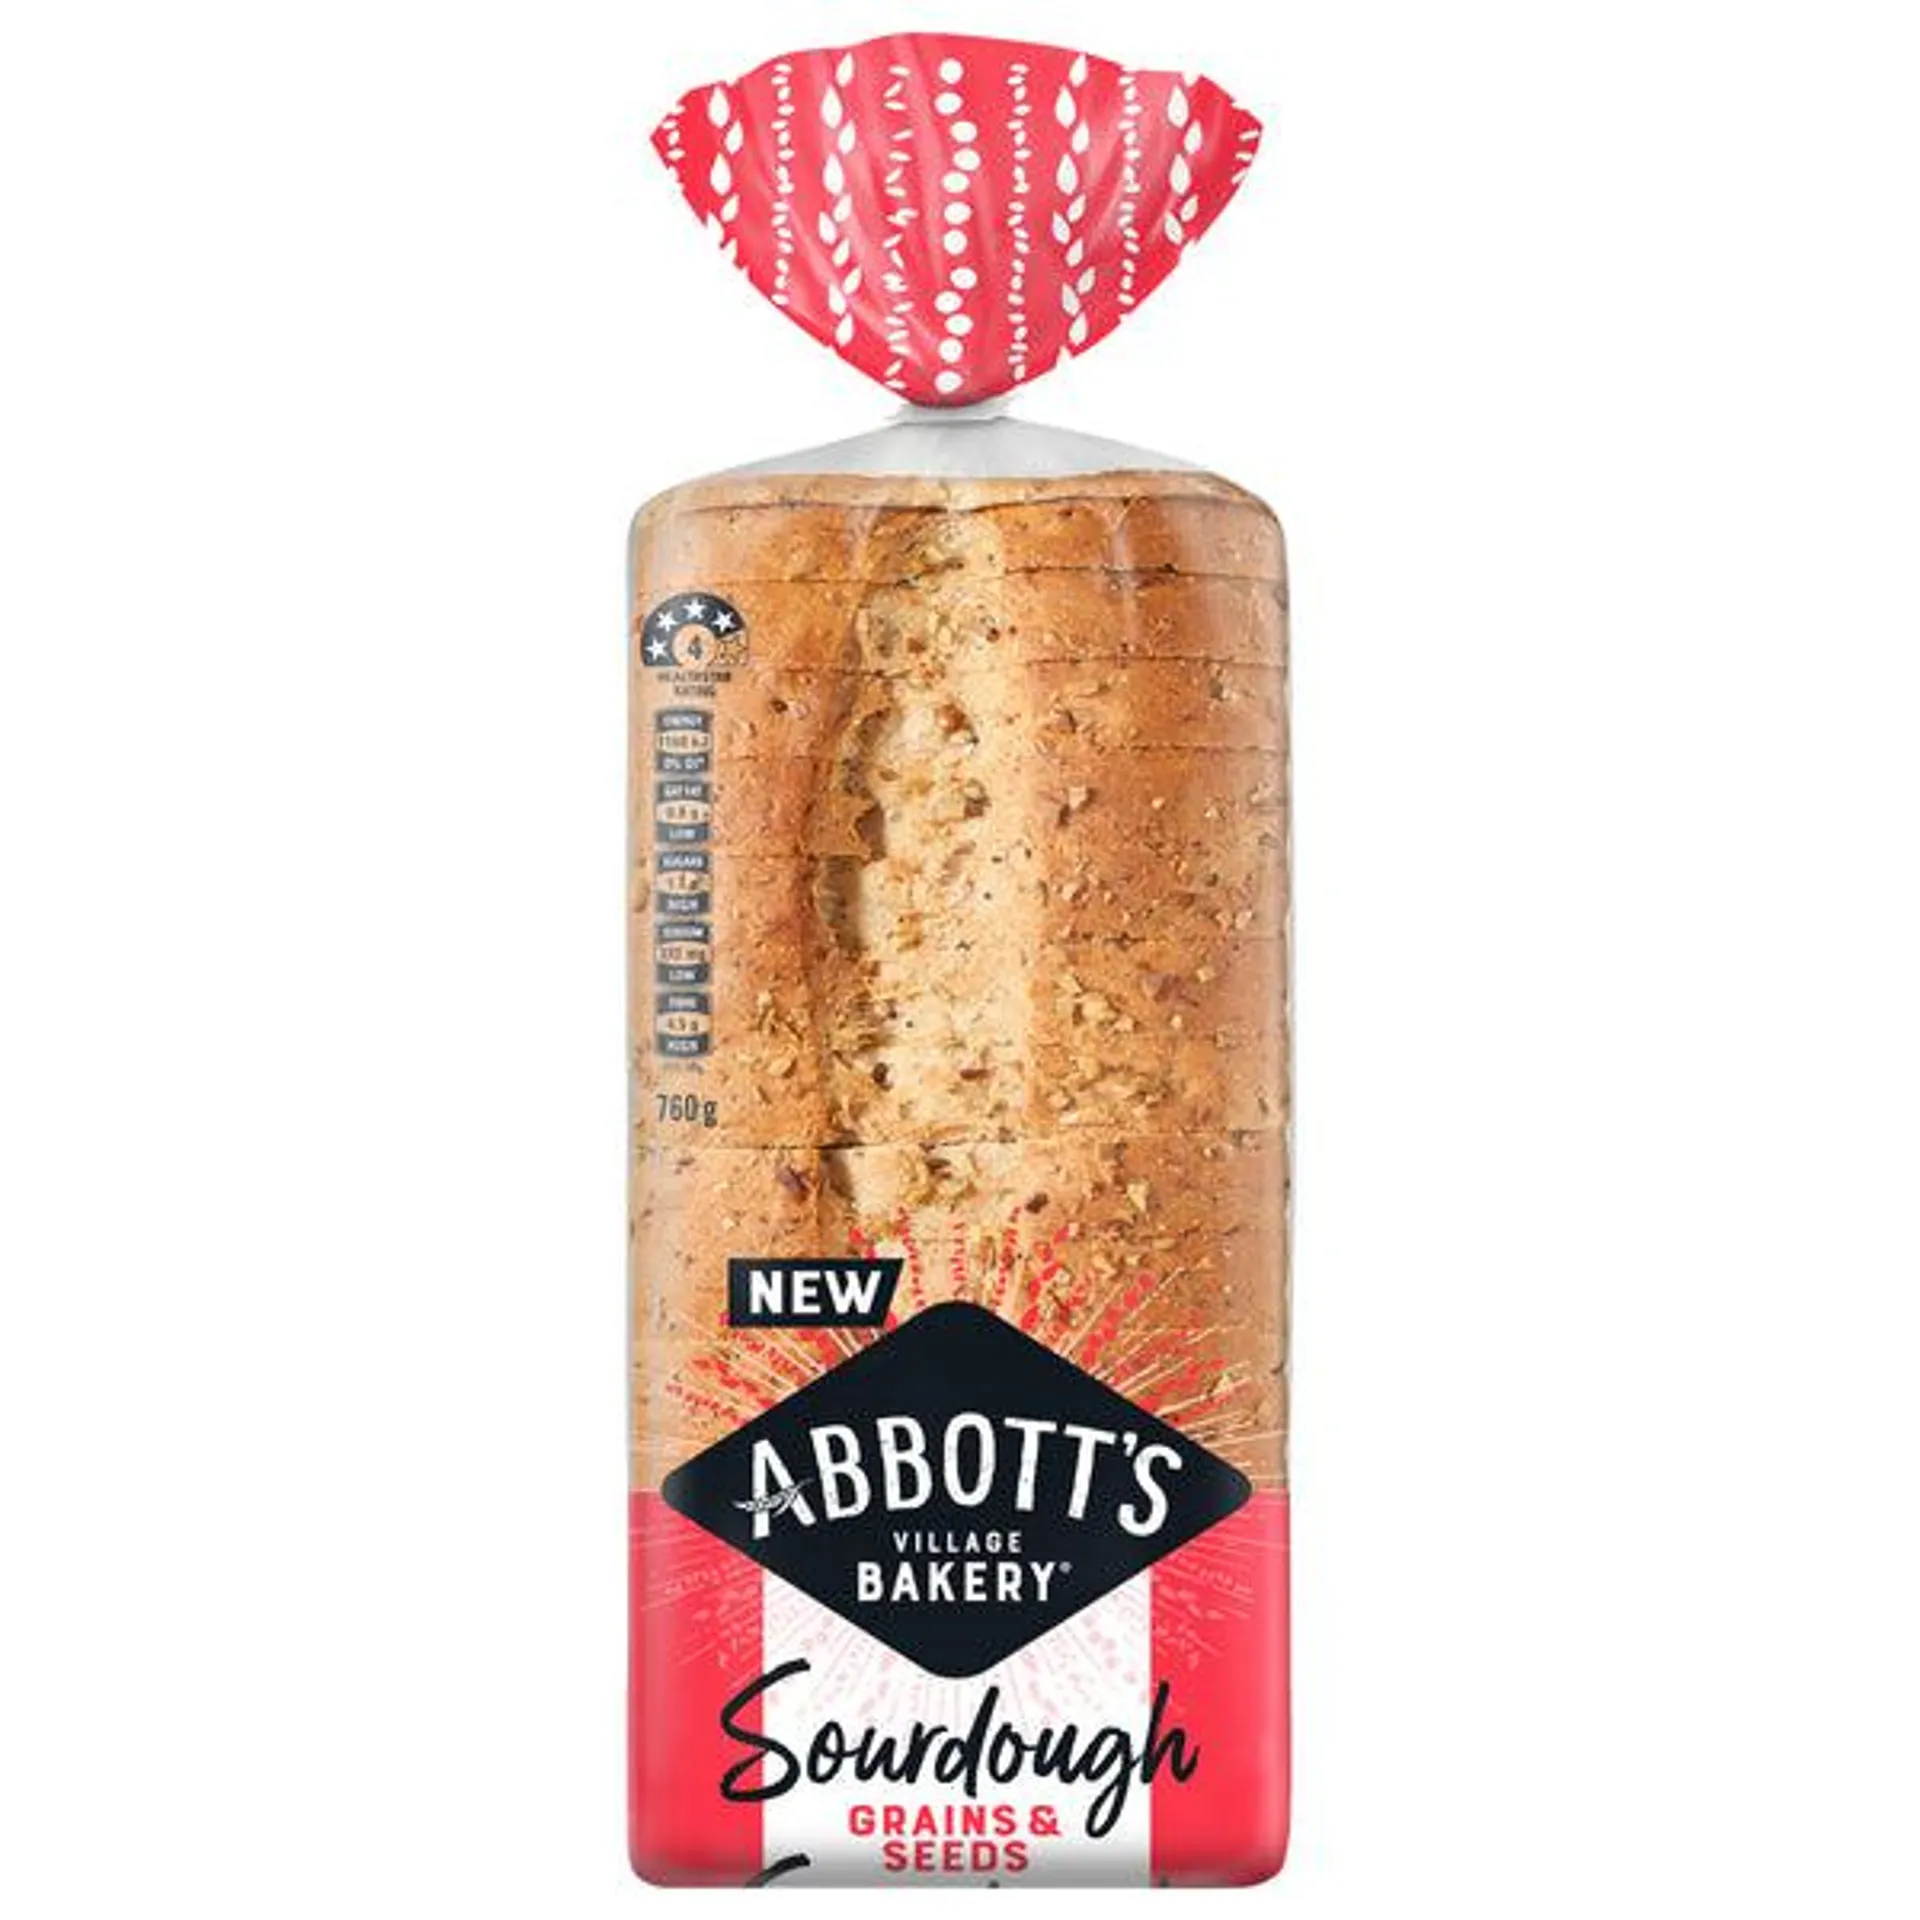 Abbotts Bakery Sourdough Grains and Seeds 760g